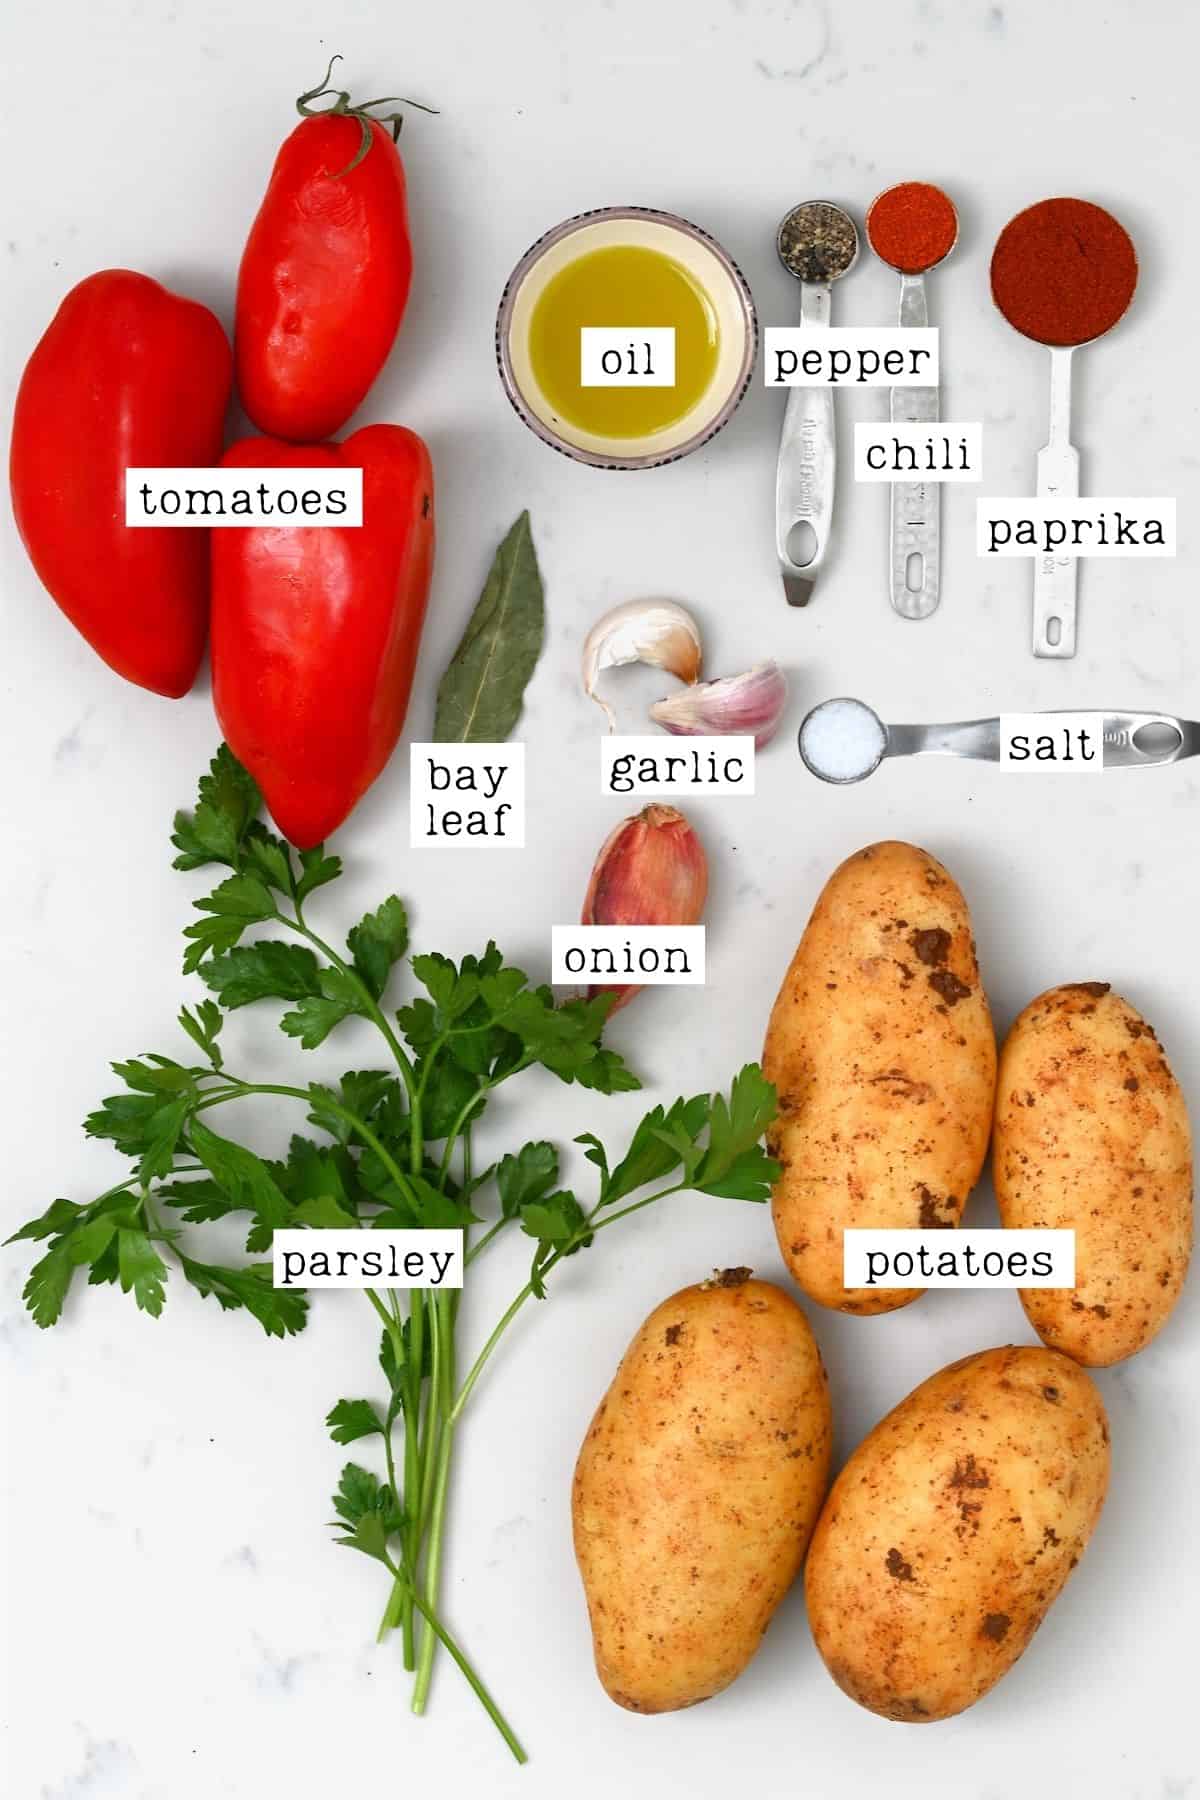 Ingredients for patatas bravas